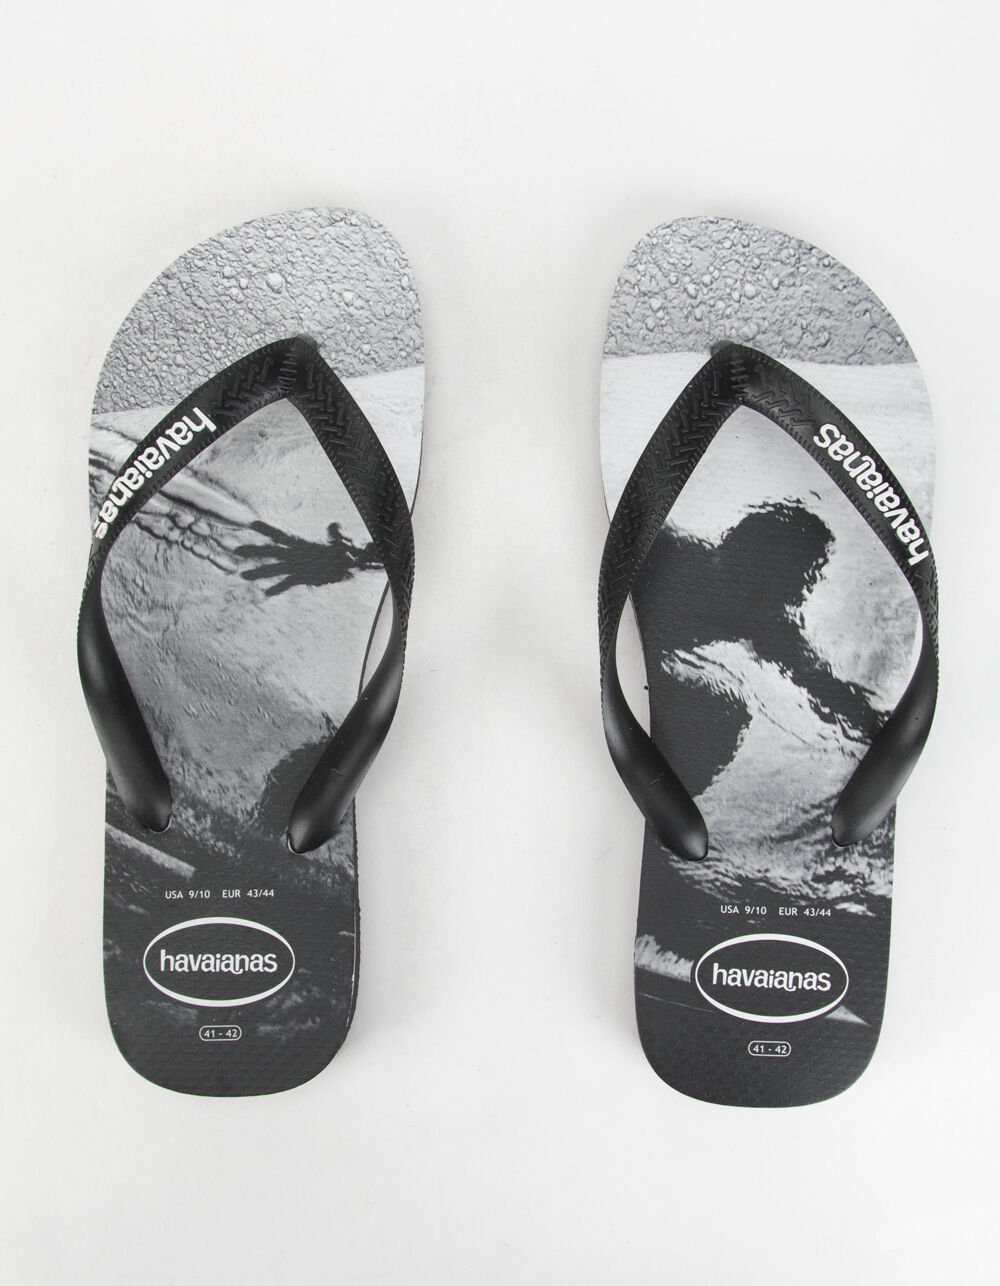 Havaianas Photoprint Flip Flop Sandals Black &White Men's 9/10 